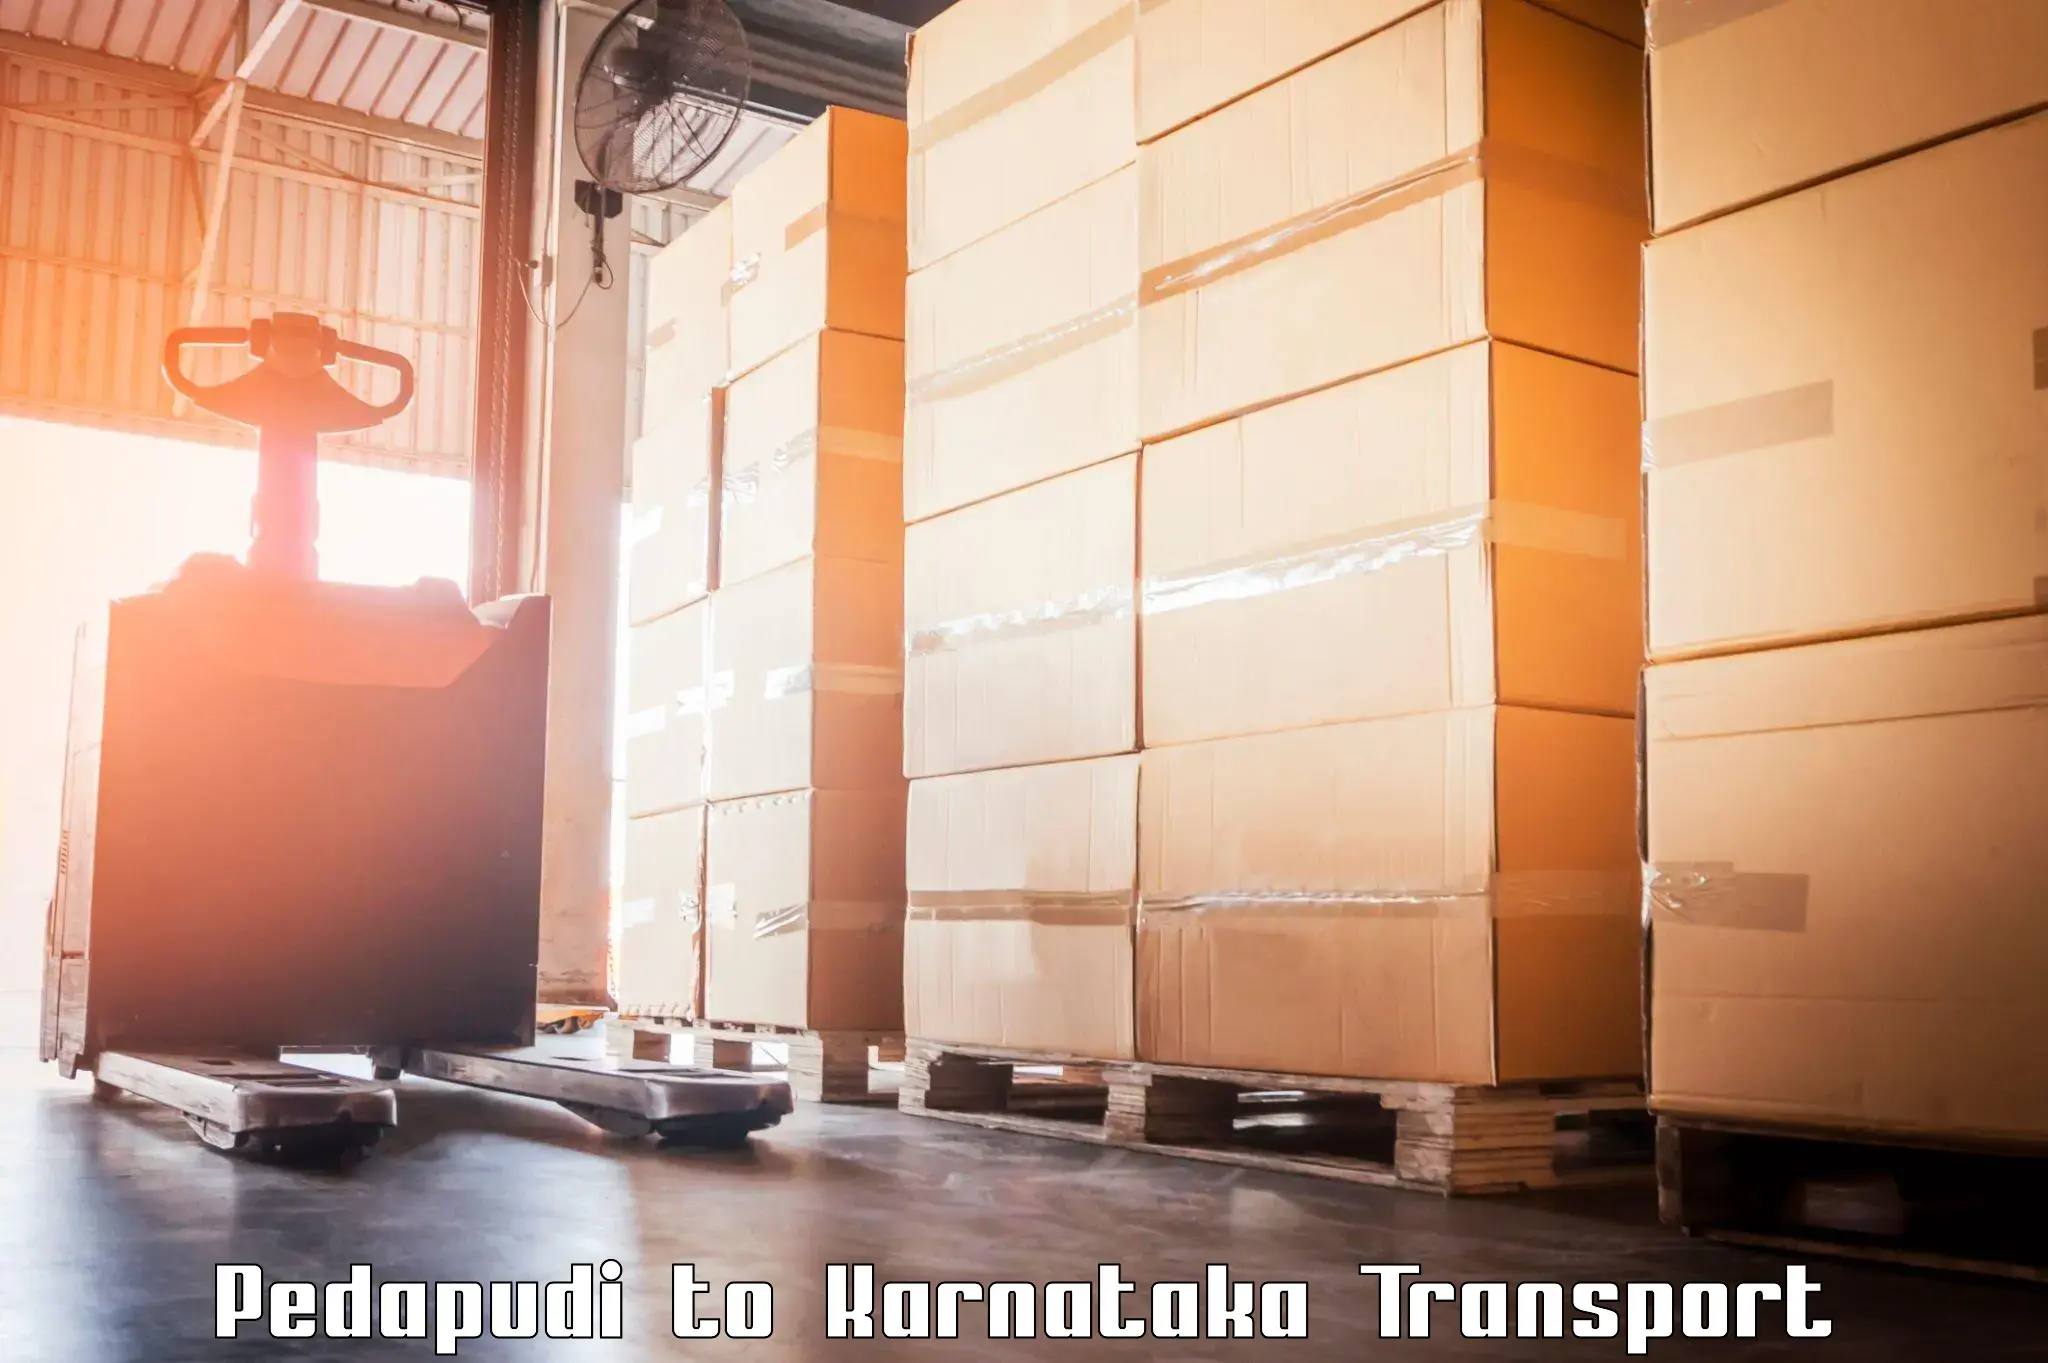 Daily parcel service transport Pedapudi to Shiralakoppa